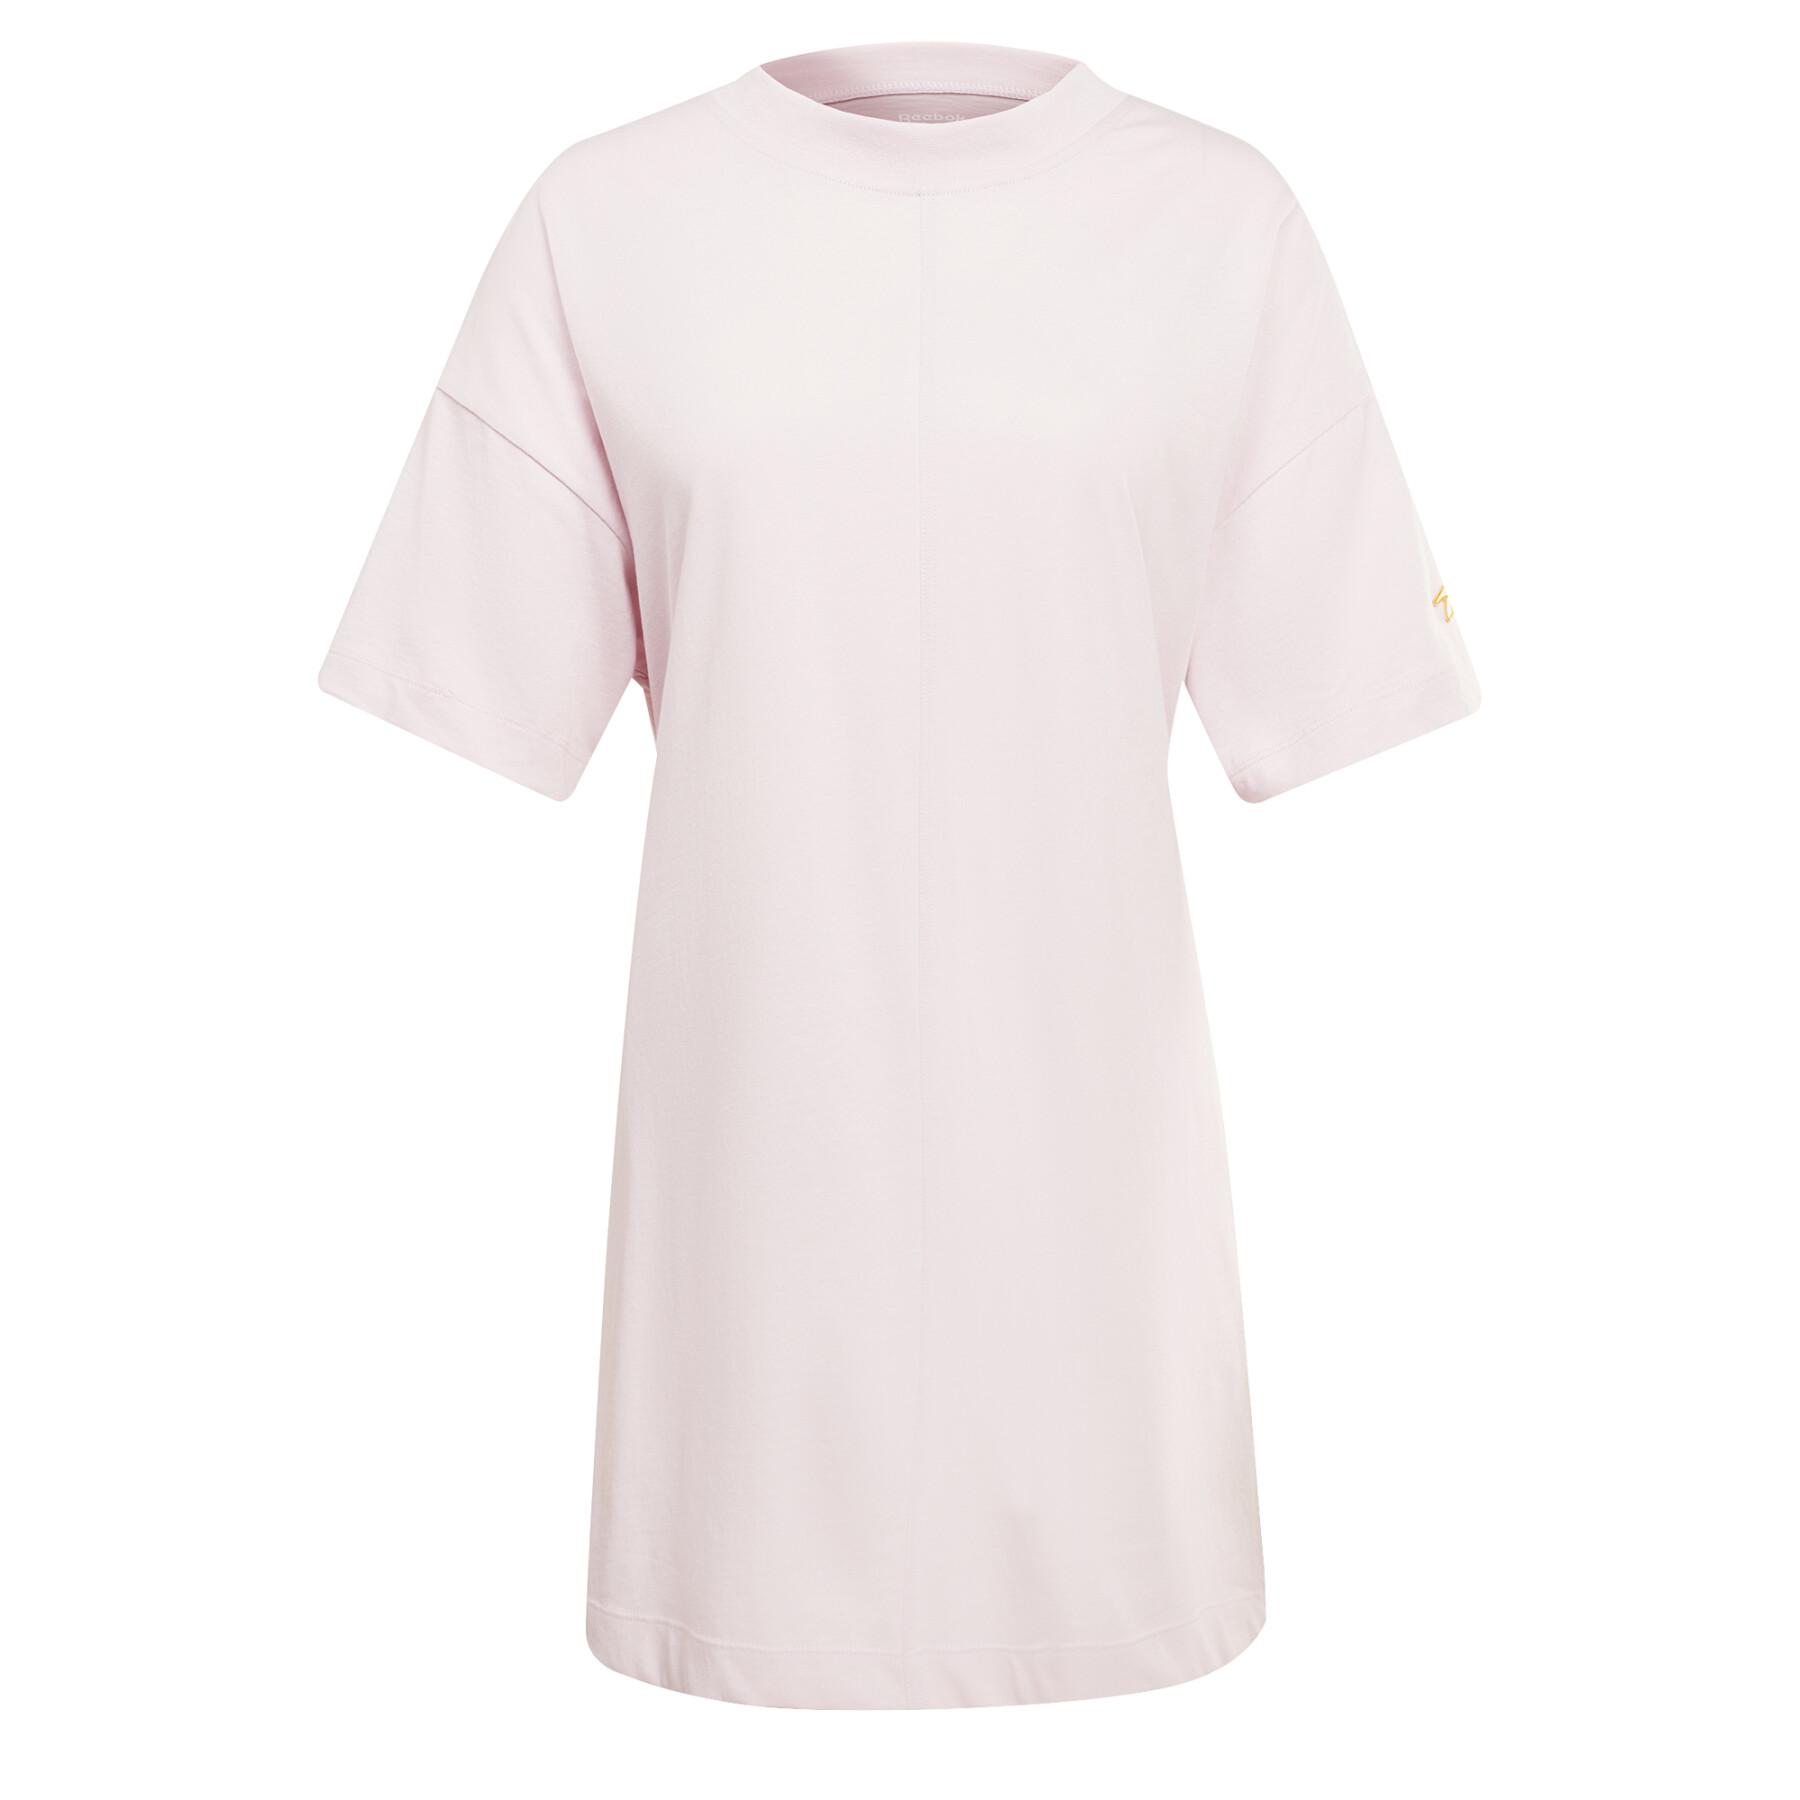 Damen-T-Shirt-Kleid Reebok MYT Dress